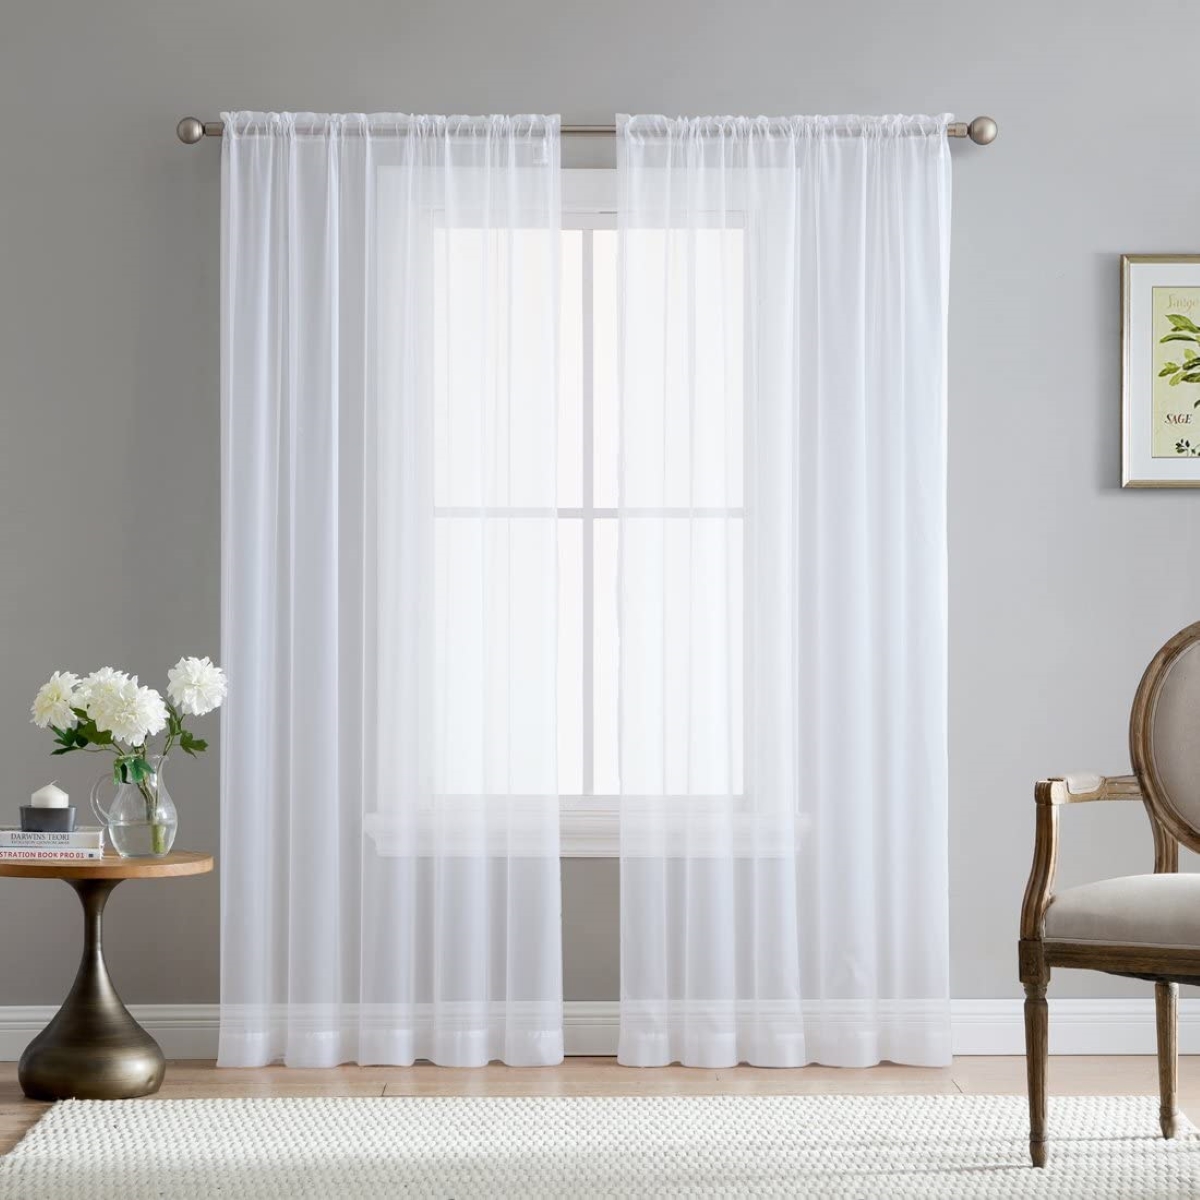 apartment decor ideas - sheer curtains